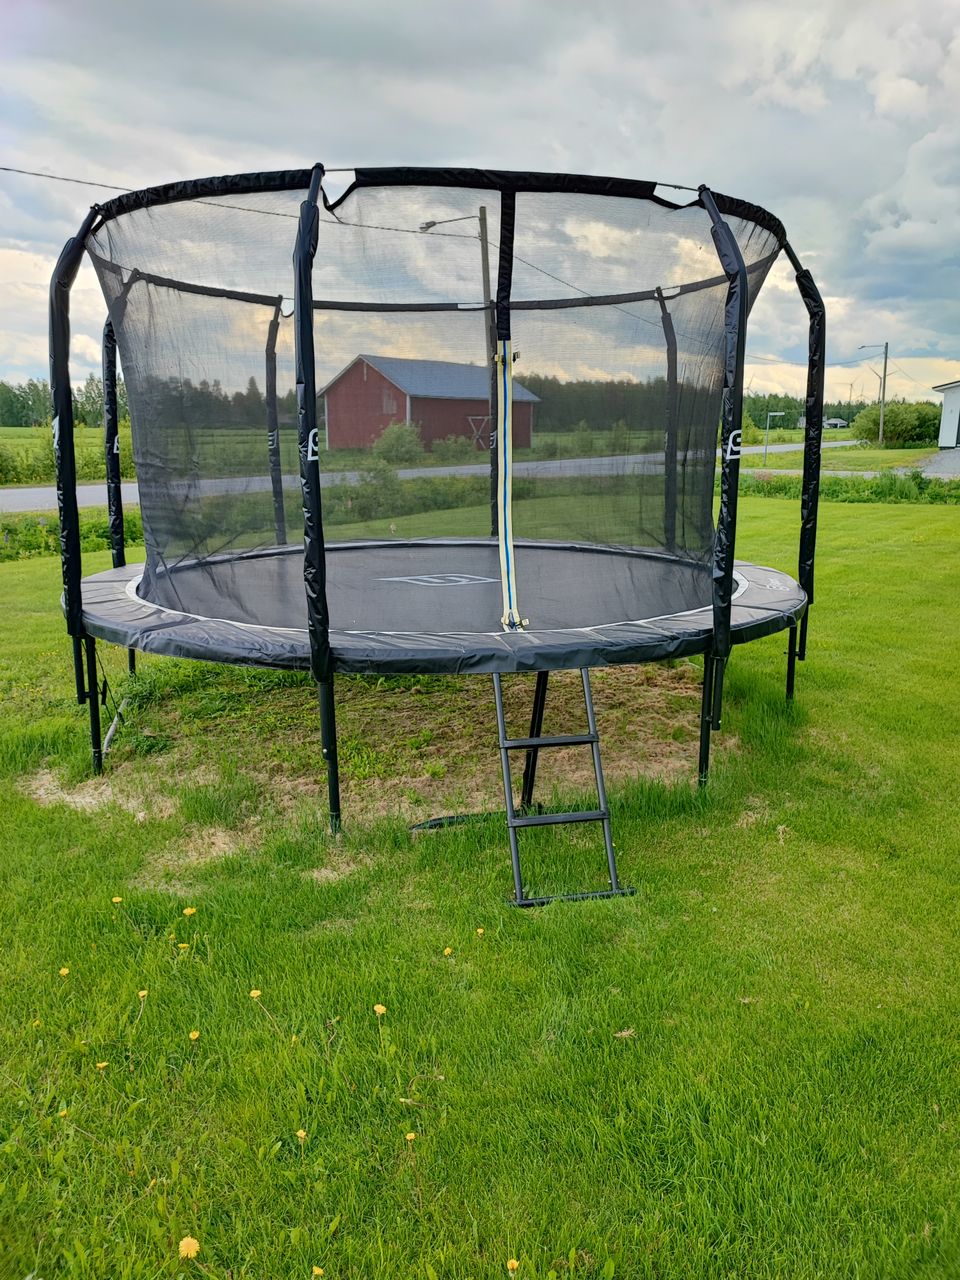 iSport Air Black 4,3 m 104 jousinen trampoliini turvaverkolla